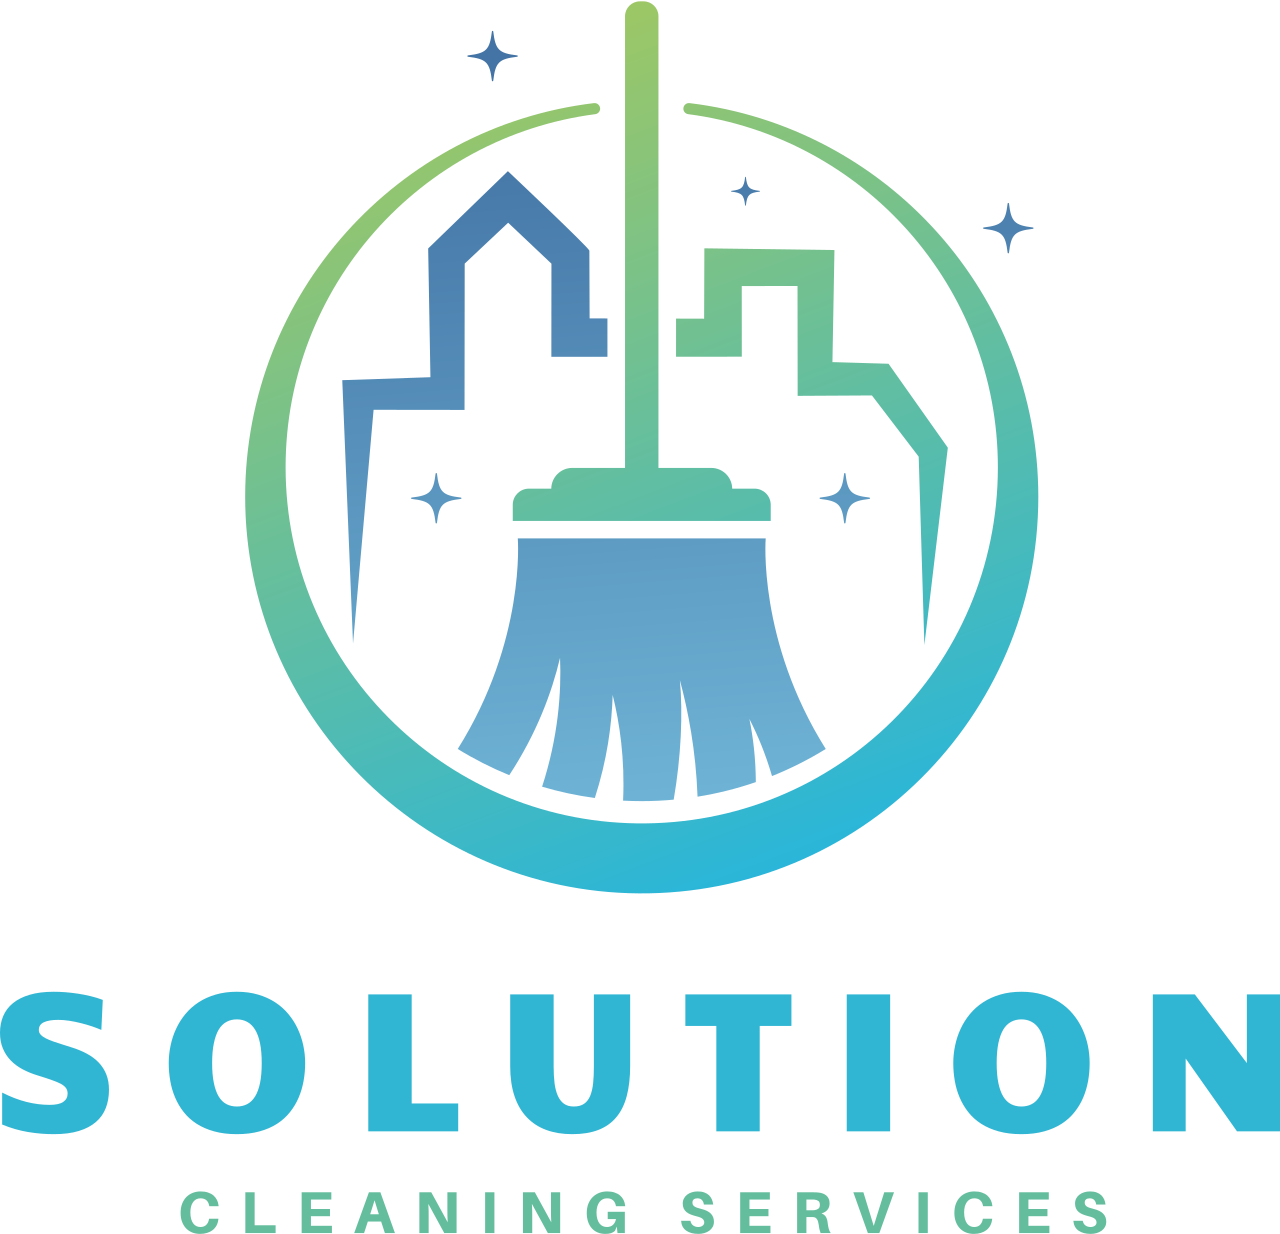 Solution's logo